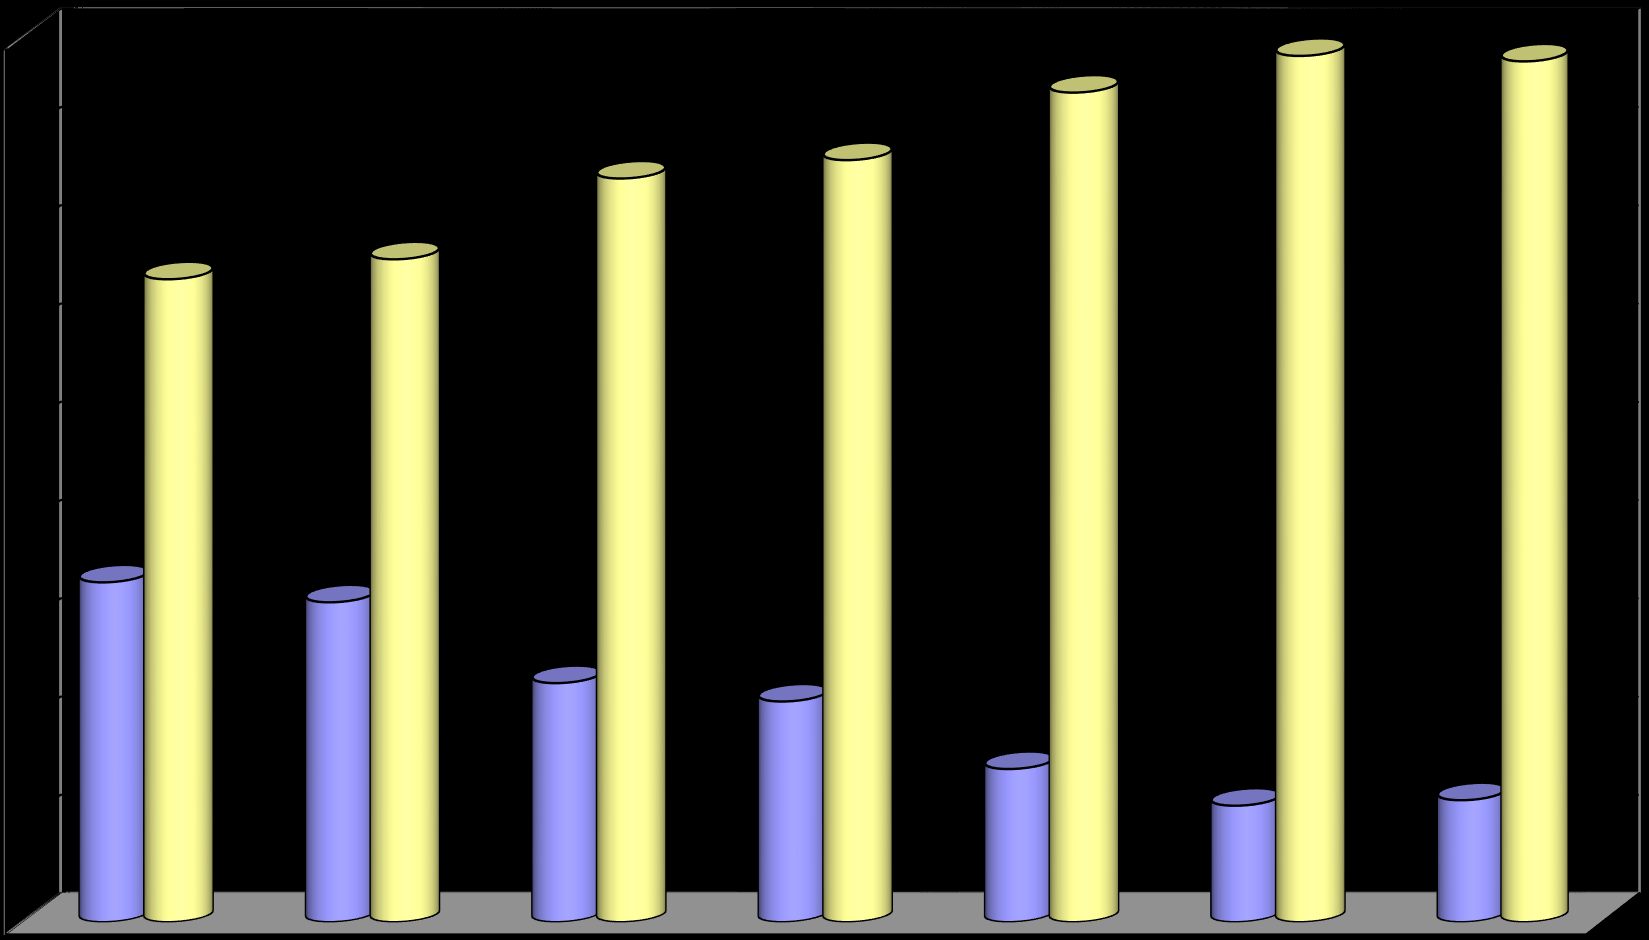 Vechicle types 1994-2000 90% 80% eastern western 75,68% 77,55% 84,42% 88,15% 87,60% 70% 65,42% 67,45% 60%